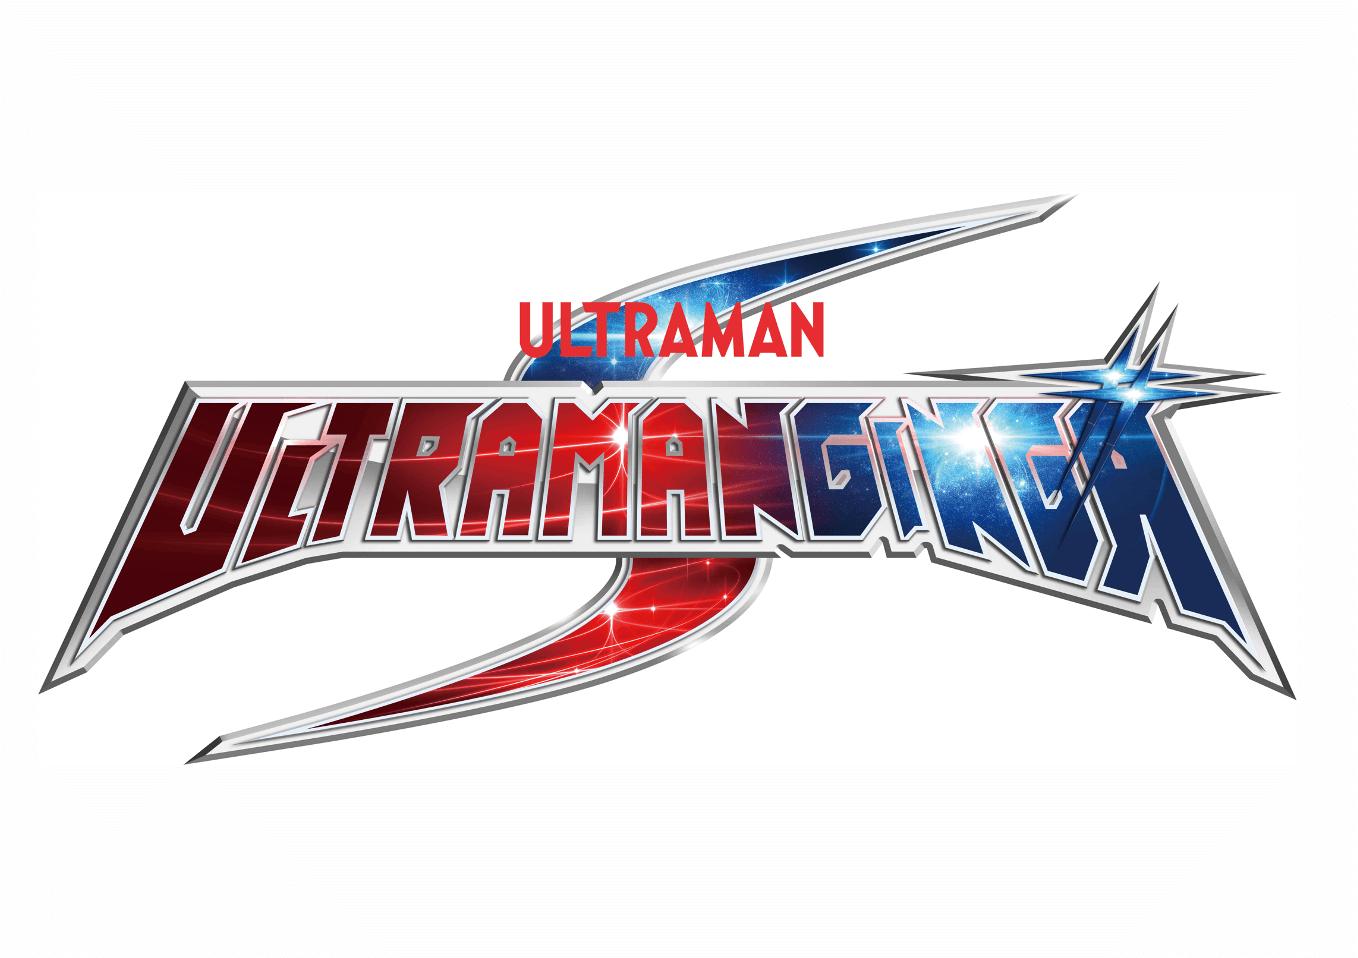 Ultraman Ginga S (2014)